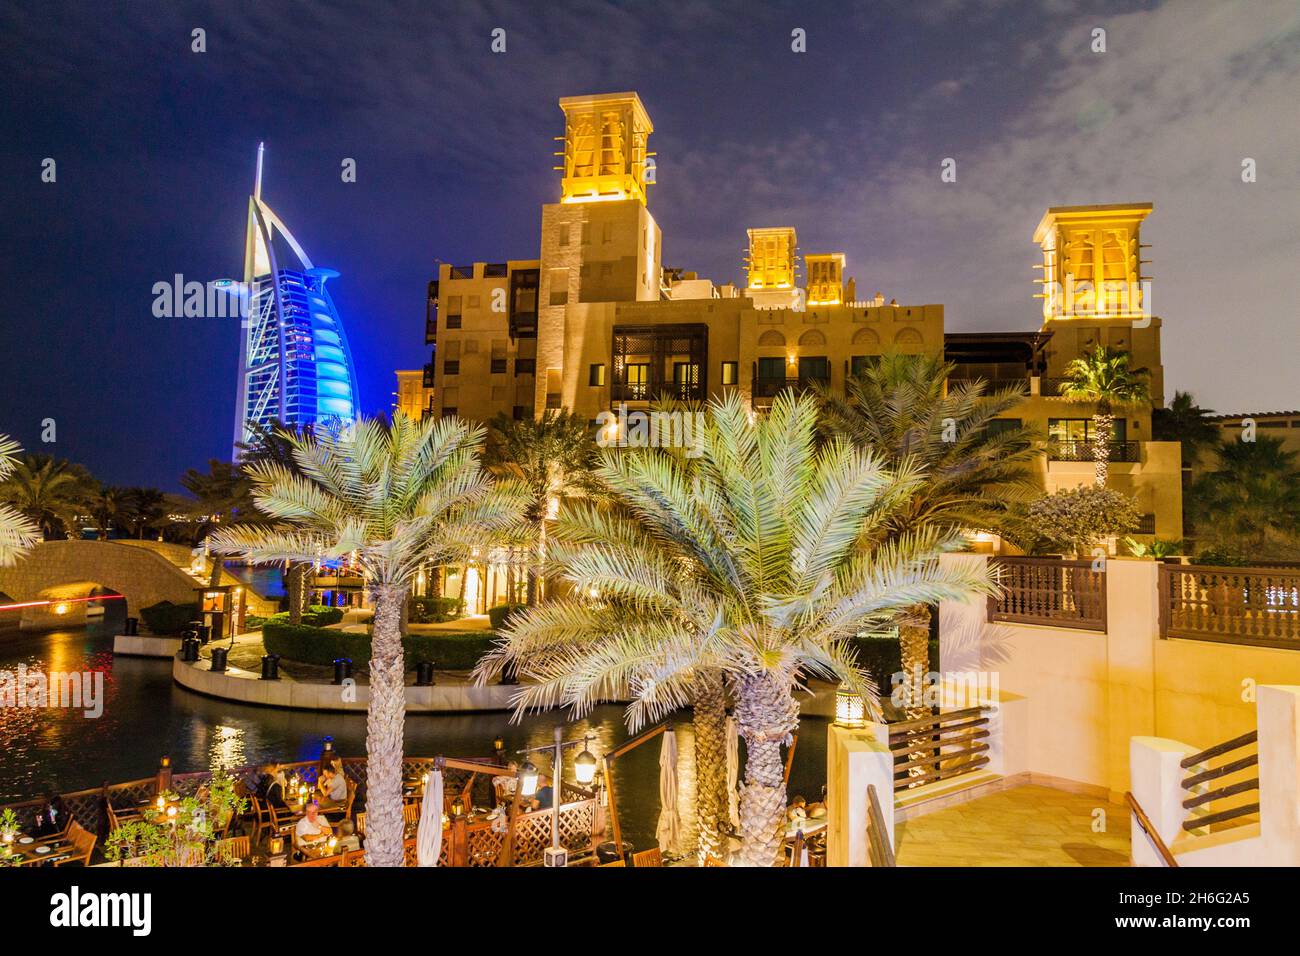 DUBAI, UAE - MARCH 11, 2017: Night view of Burj Al Arab Tower of the Arabs seen from Madinat Jumeirah in Dubai, United Arab Emirates Stock Photo